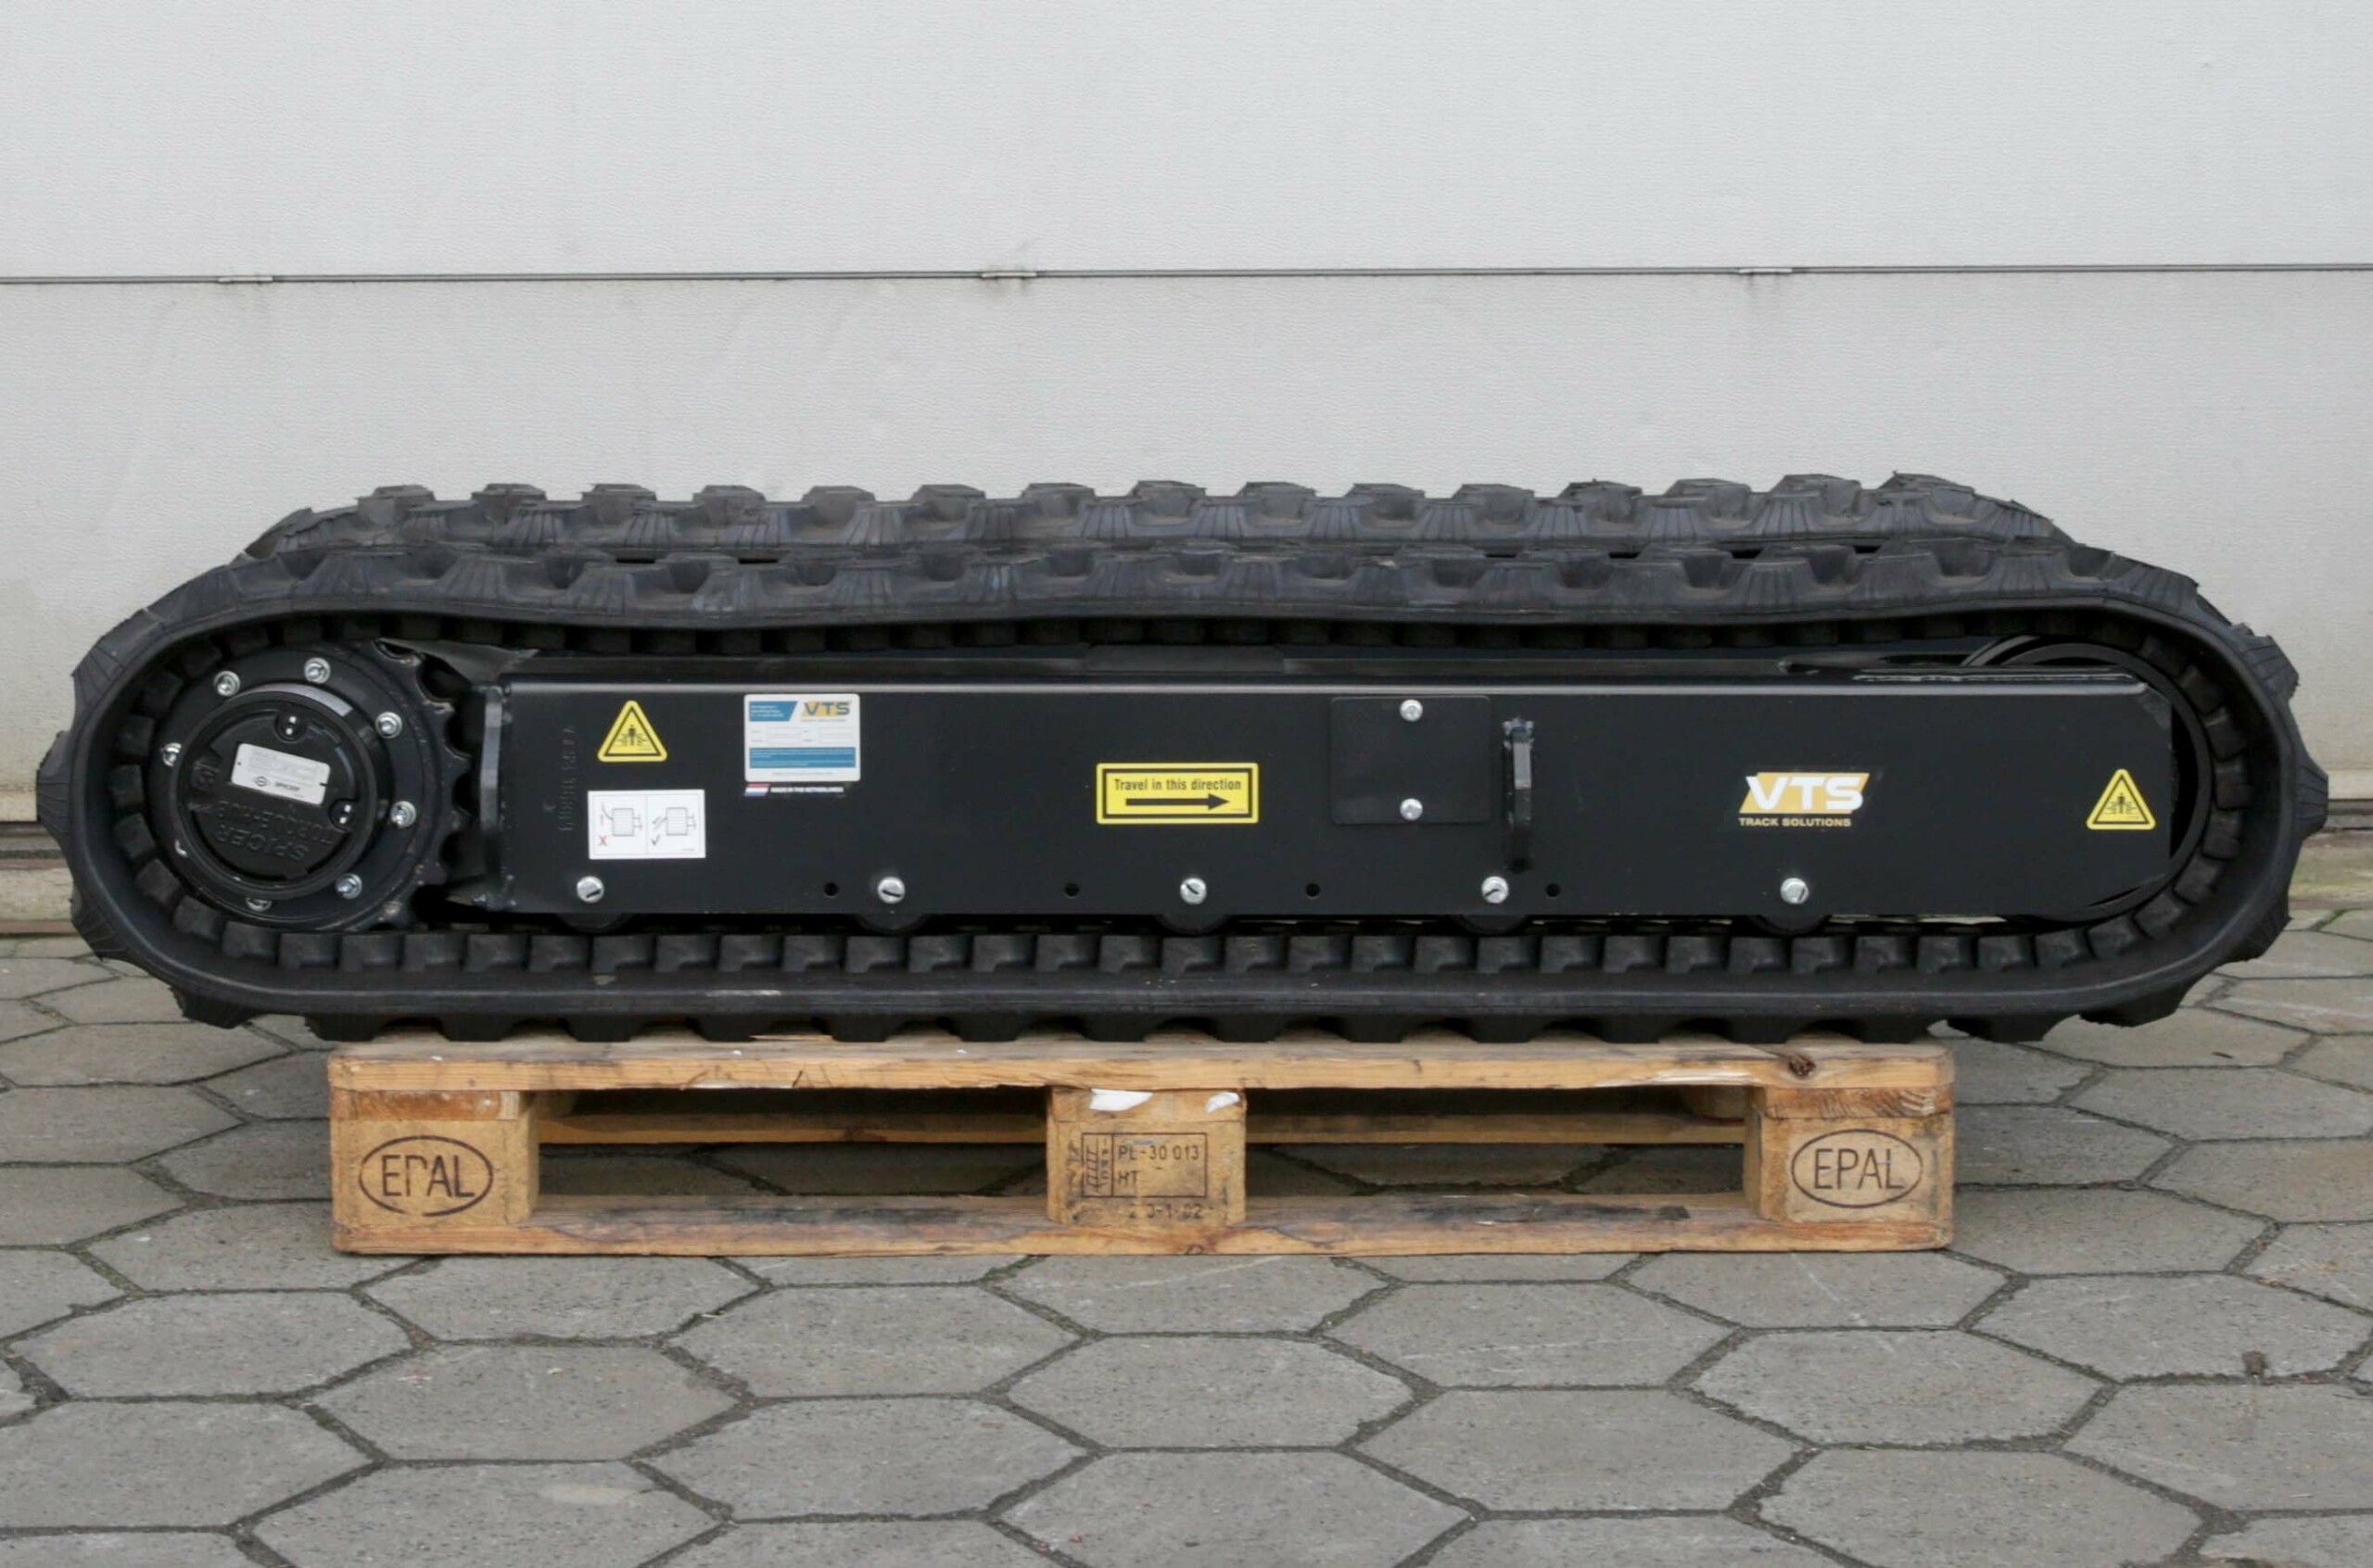 VTS-2000-1722mm / Max. load: 3000kg